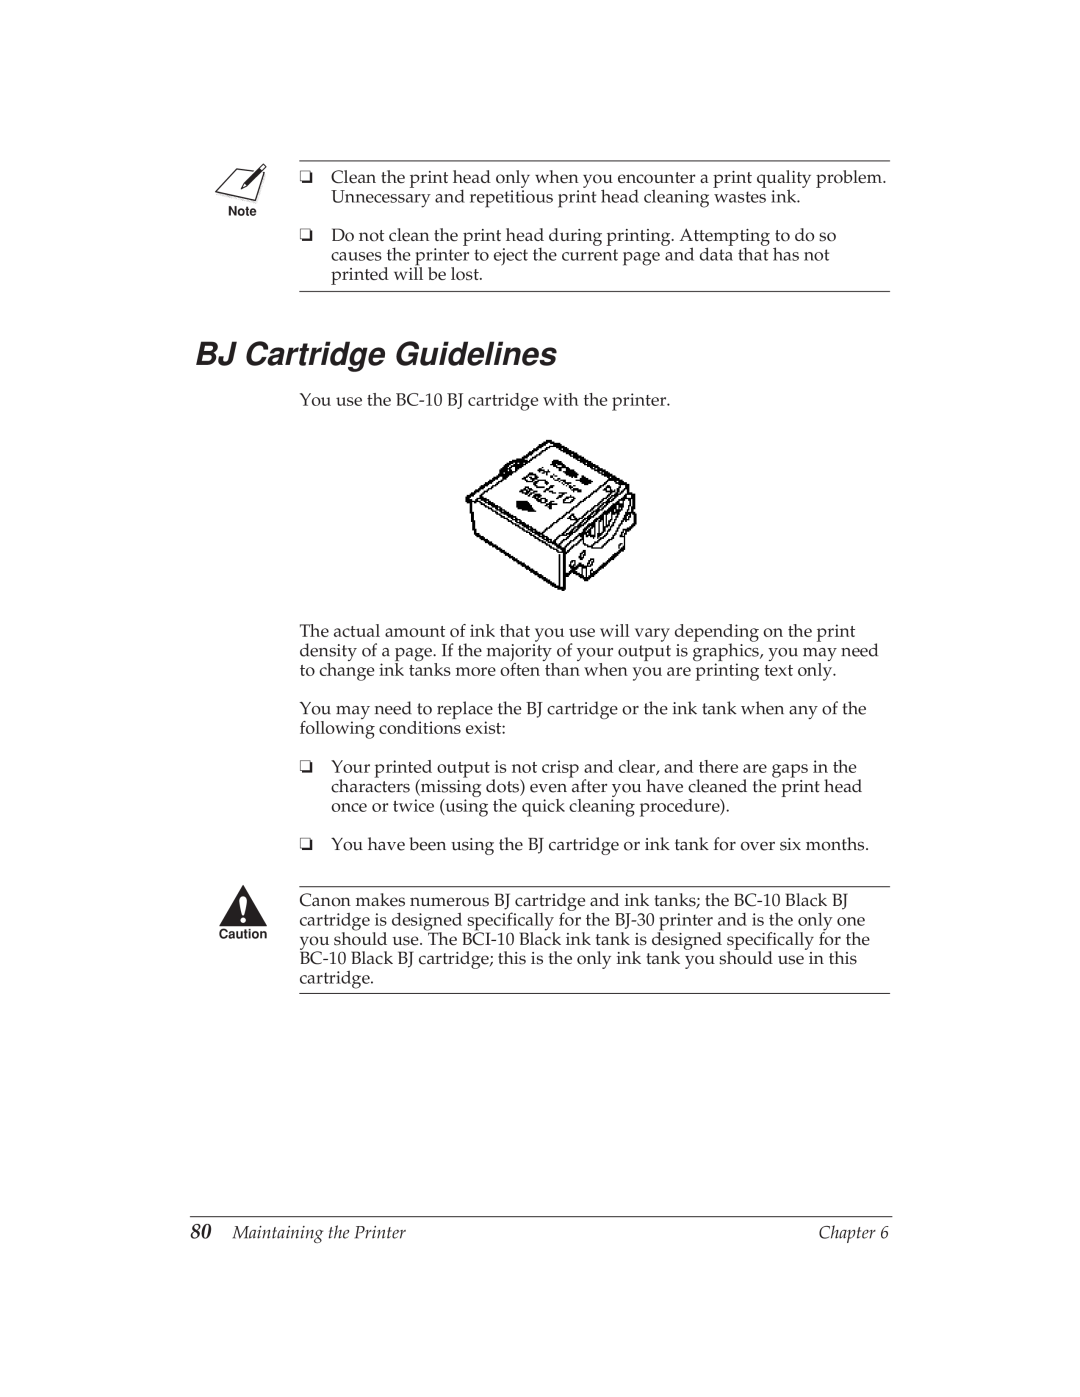 Canon BJ-30 manual BJ Cartridge Guidelines 